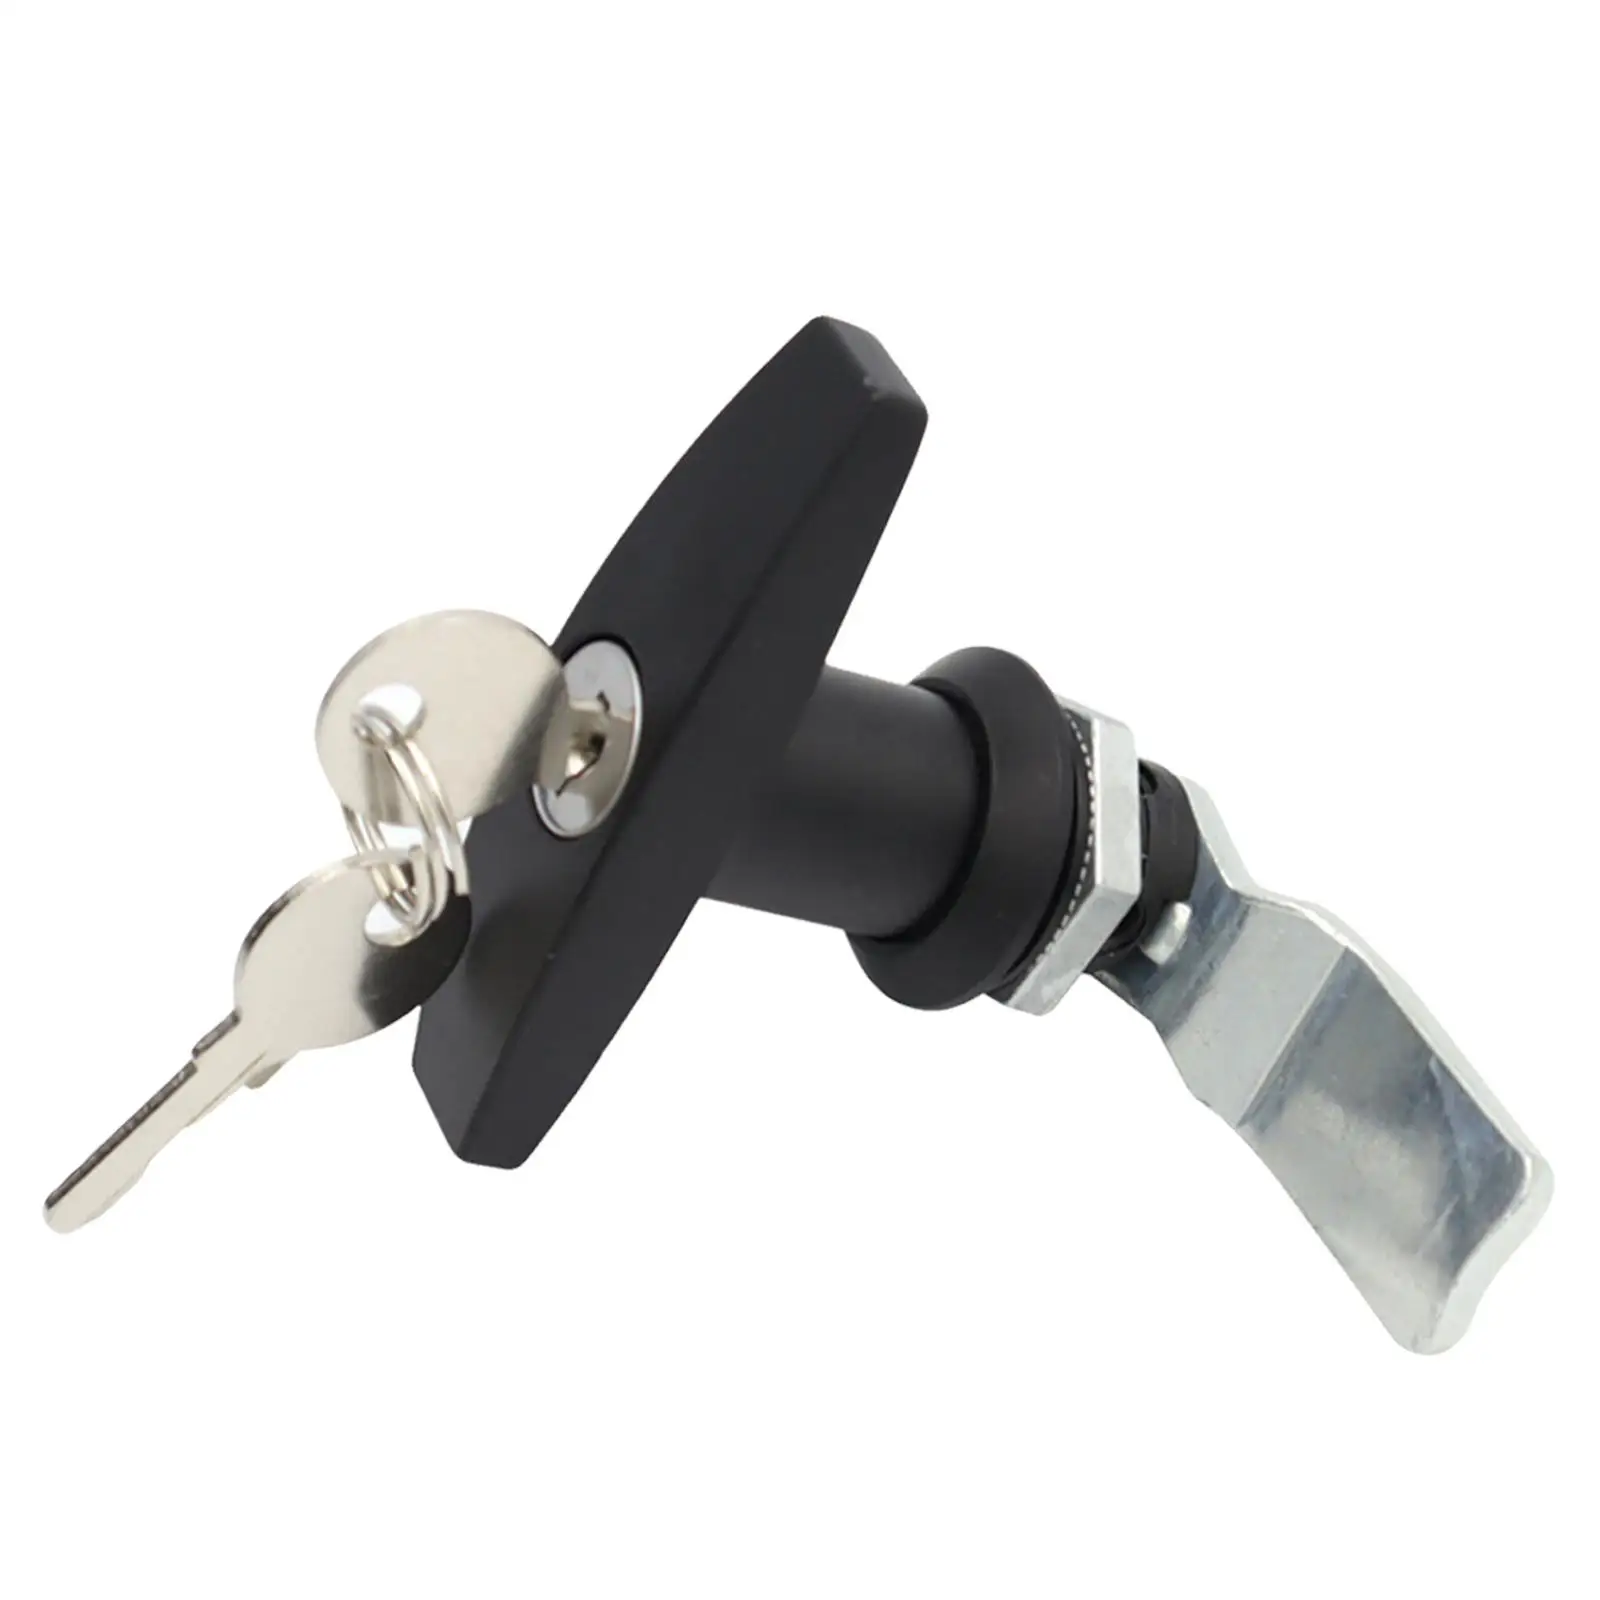 Anti   with Keys RV  Garage  Handle  Locks Accessories Industrial Cabinet Hardware